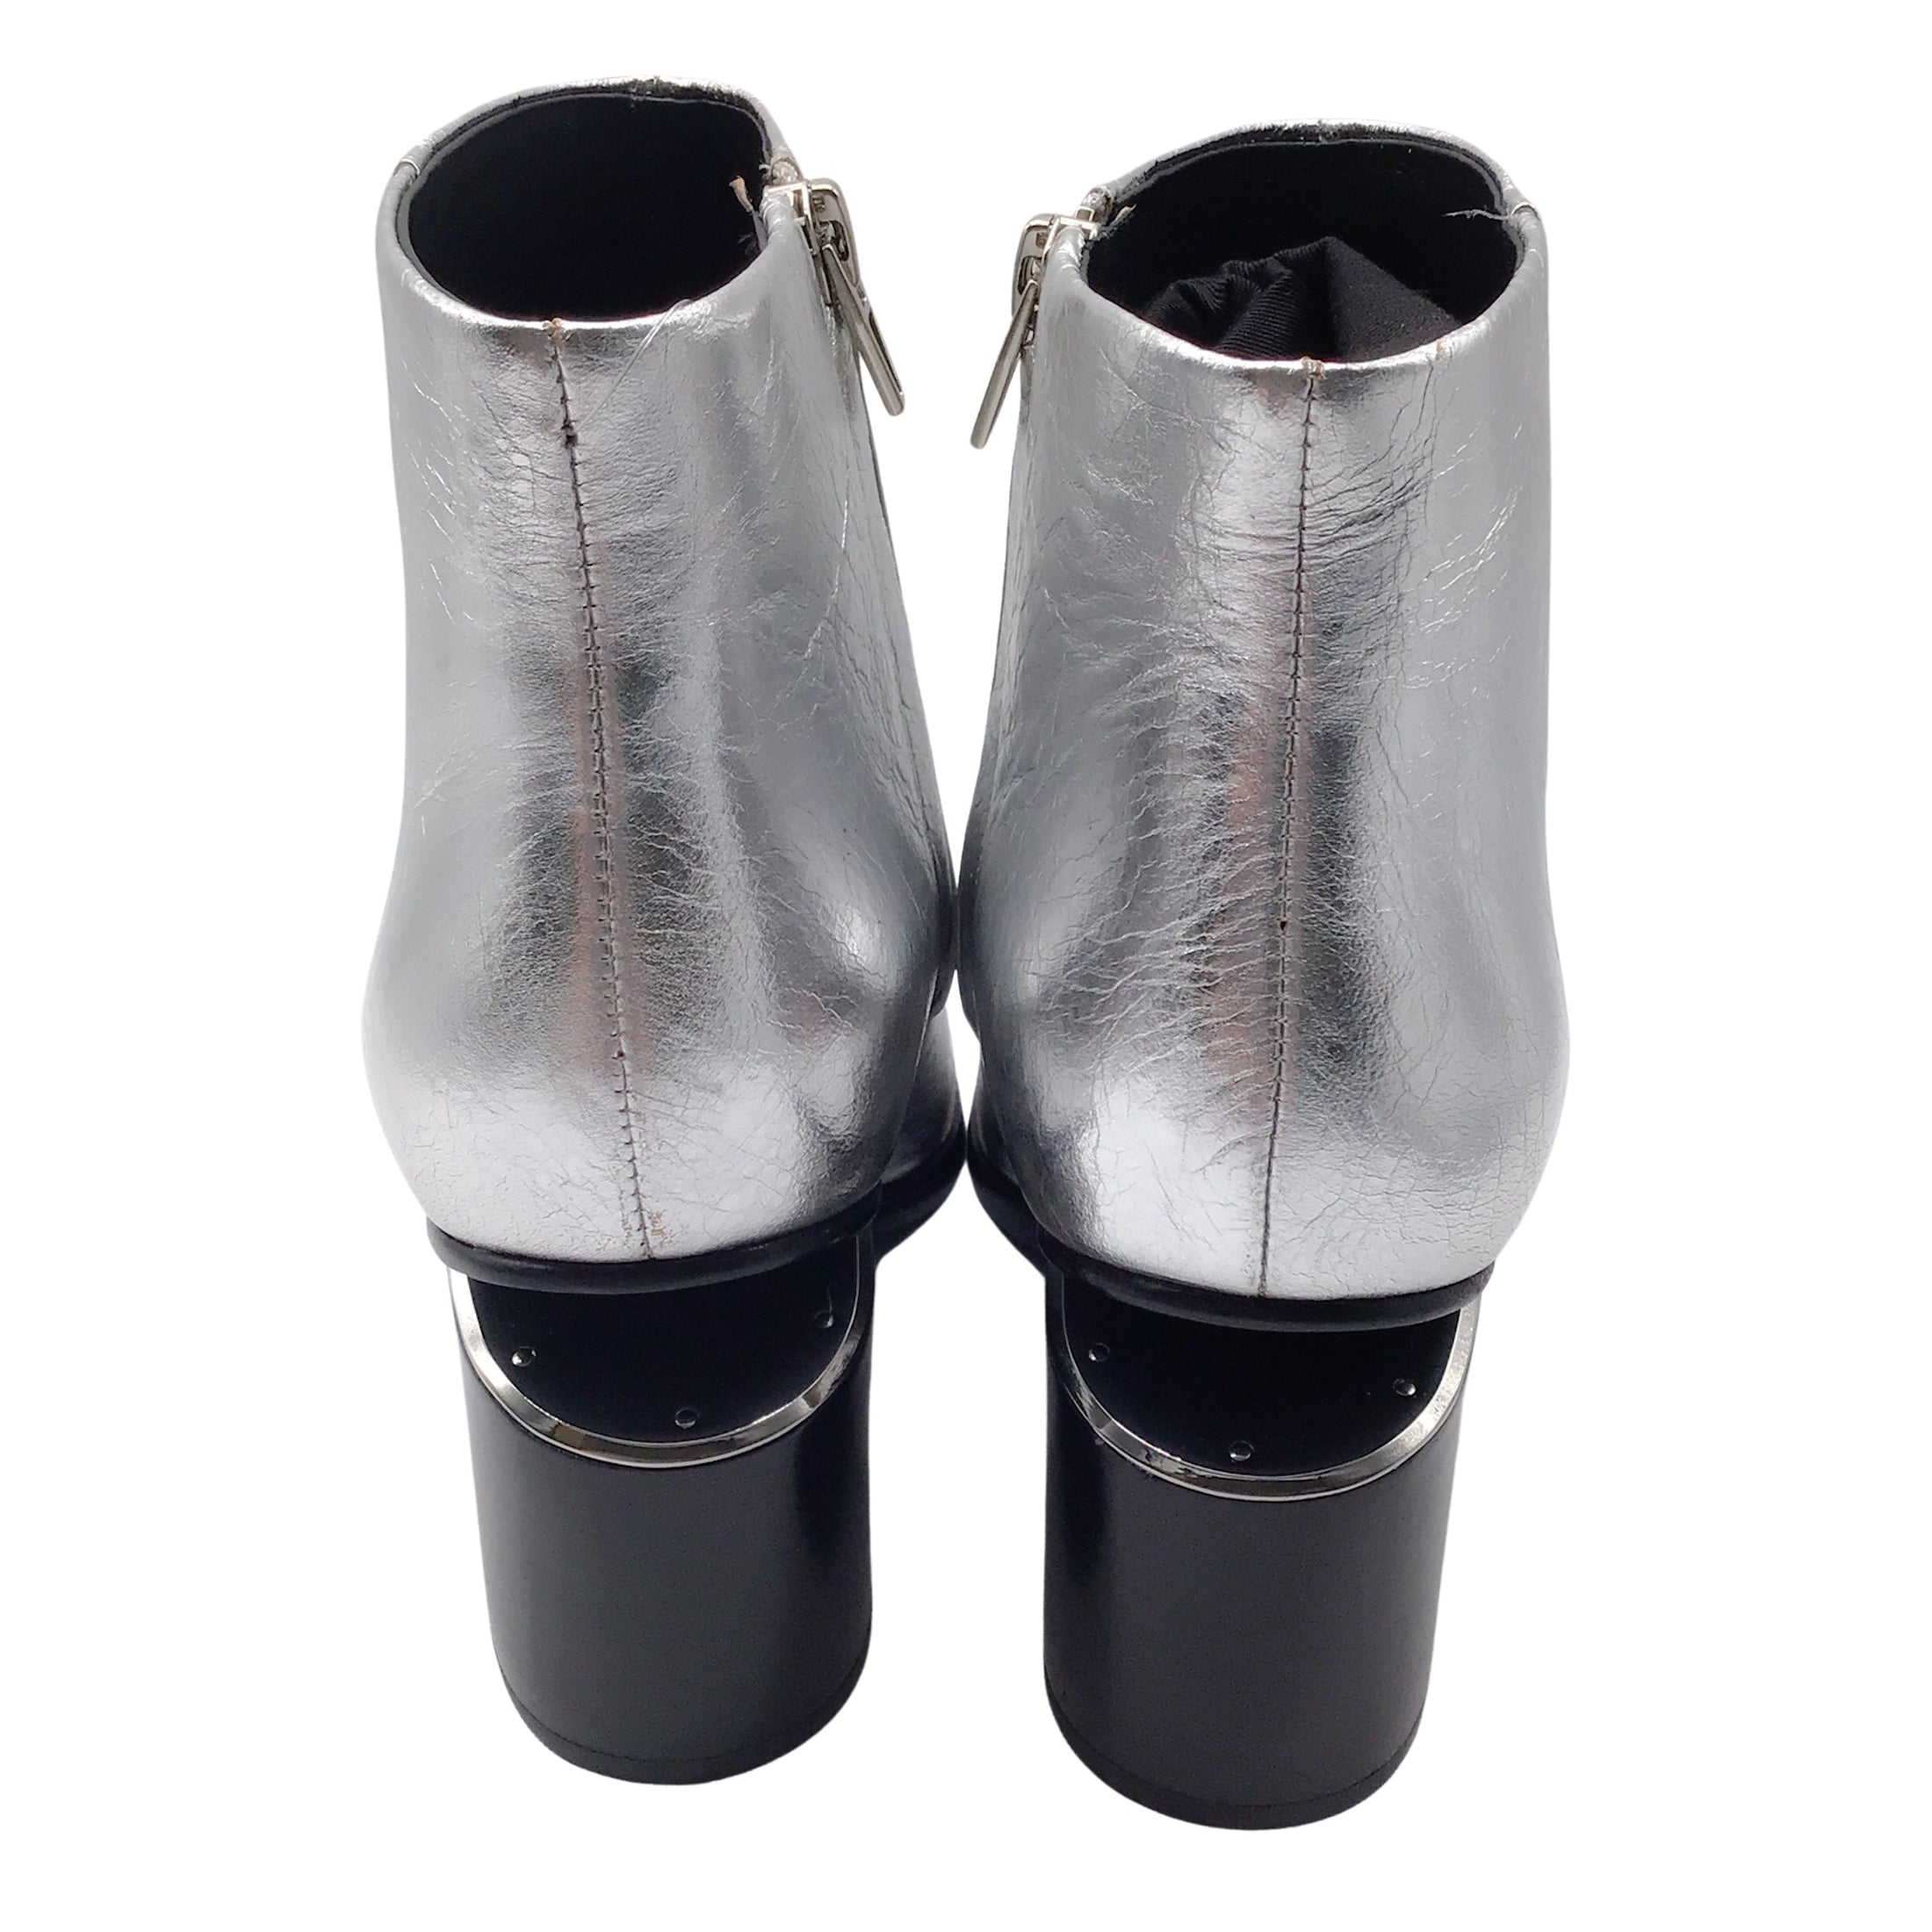 Alexander Wang Gabi Silver Metallic Leather Floating Heel Boots / Booties